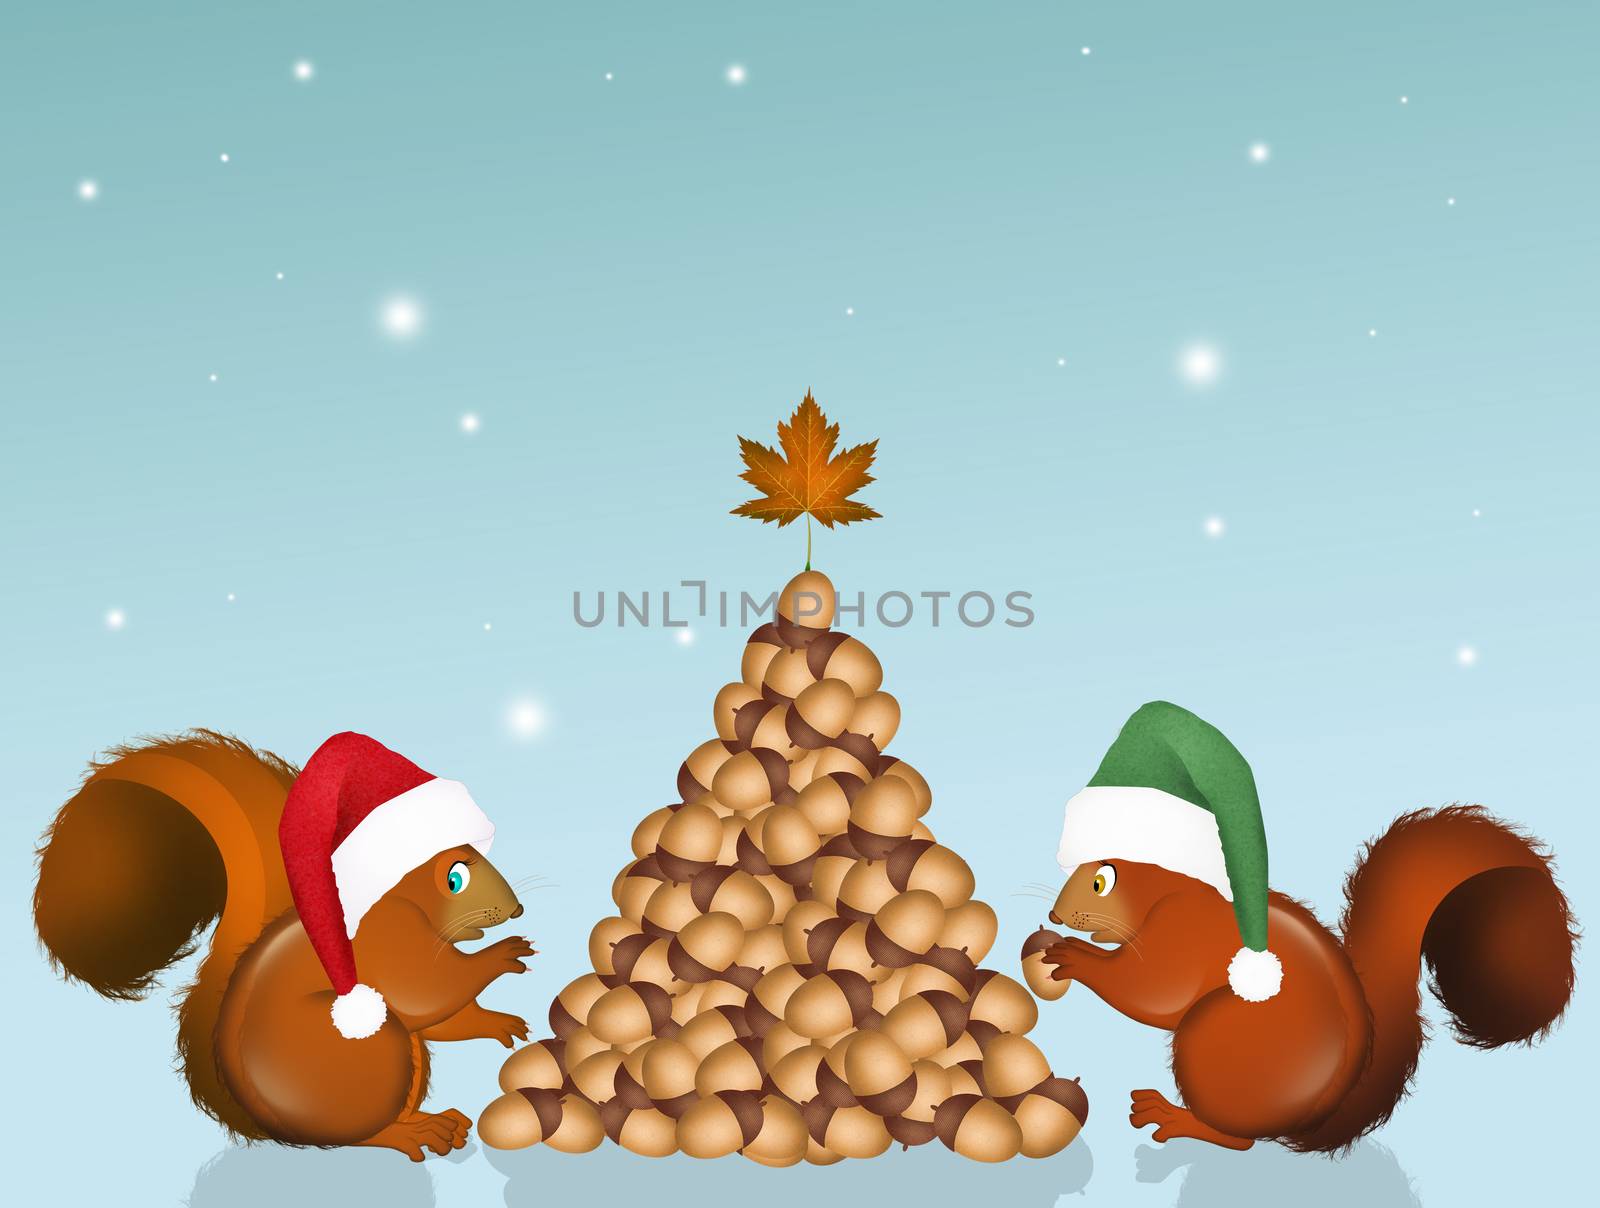 Christmas squirrels make tree with acorns by adrenalina